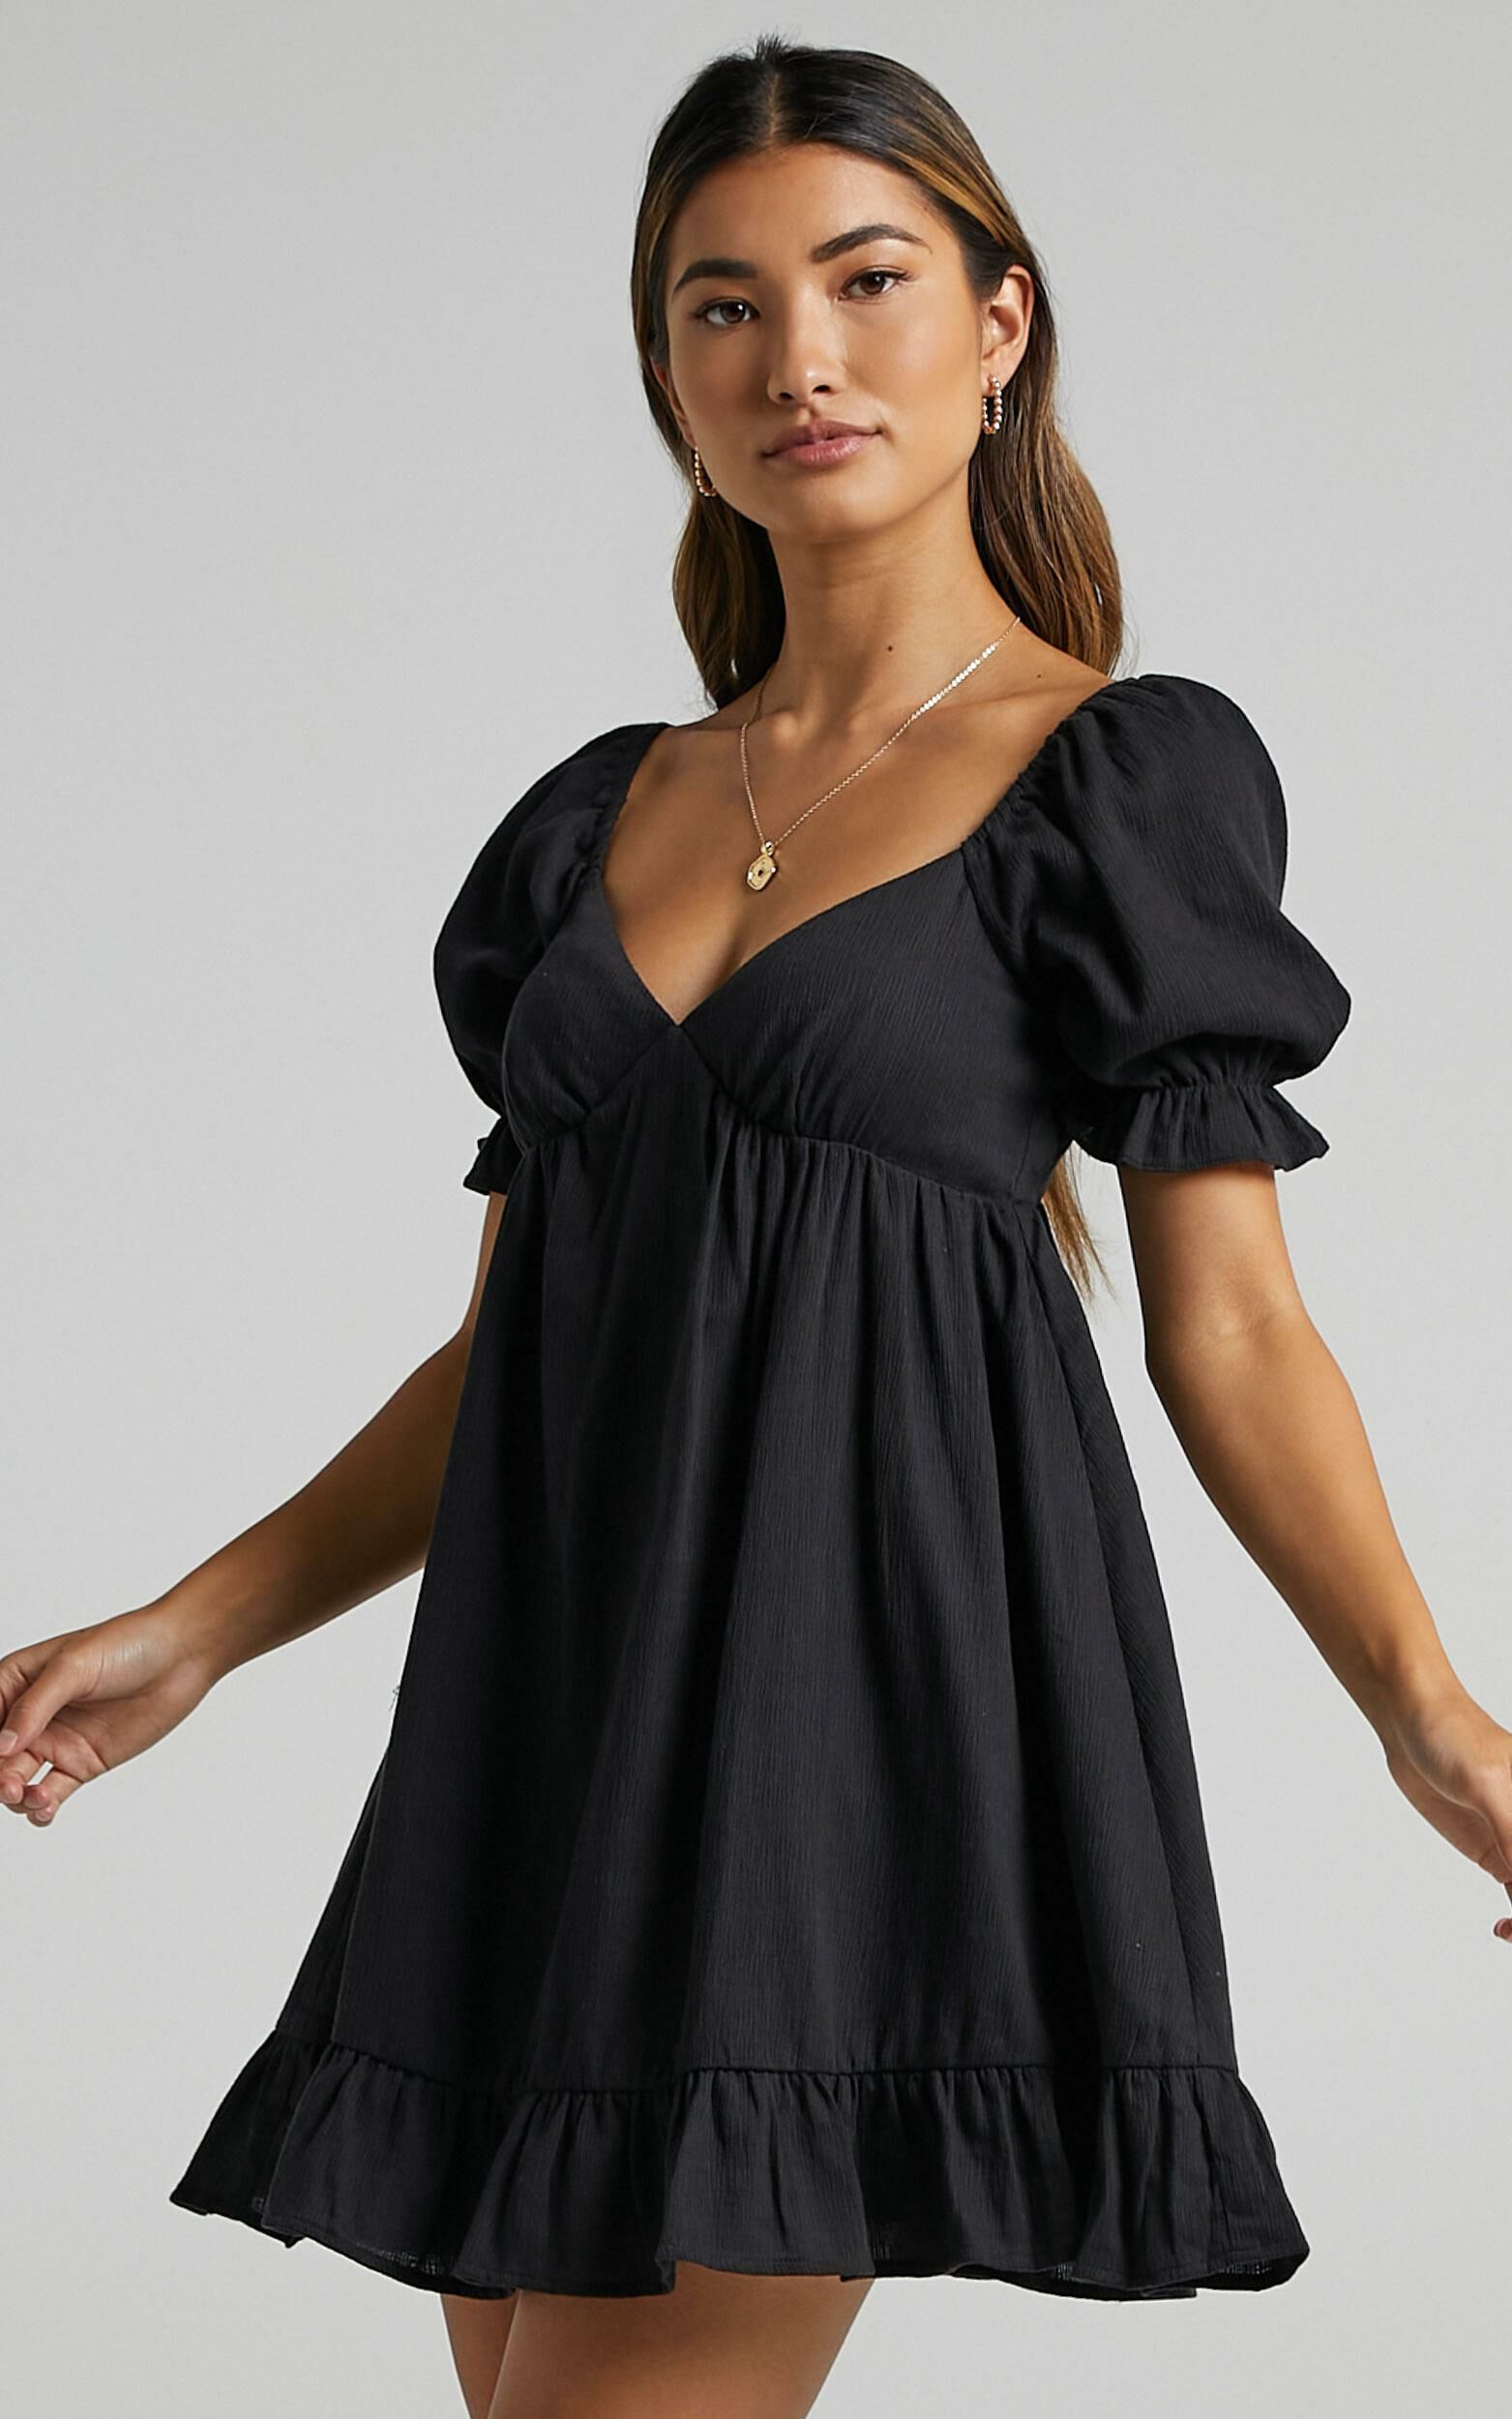 Levana Mini Dress - Empire Waist Puff Sleeve Dress in Black - 06, BLK1